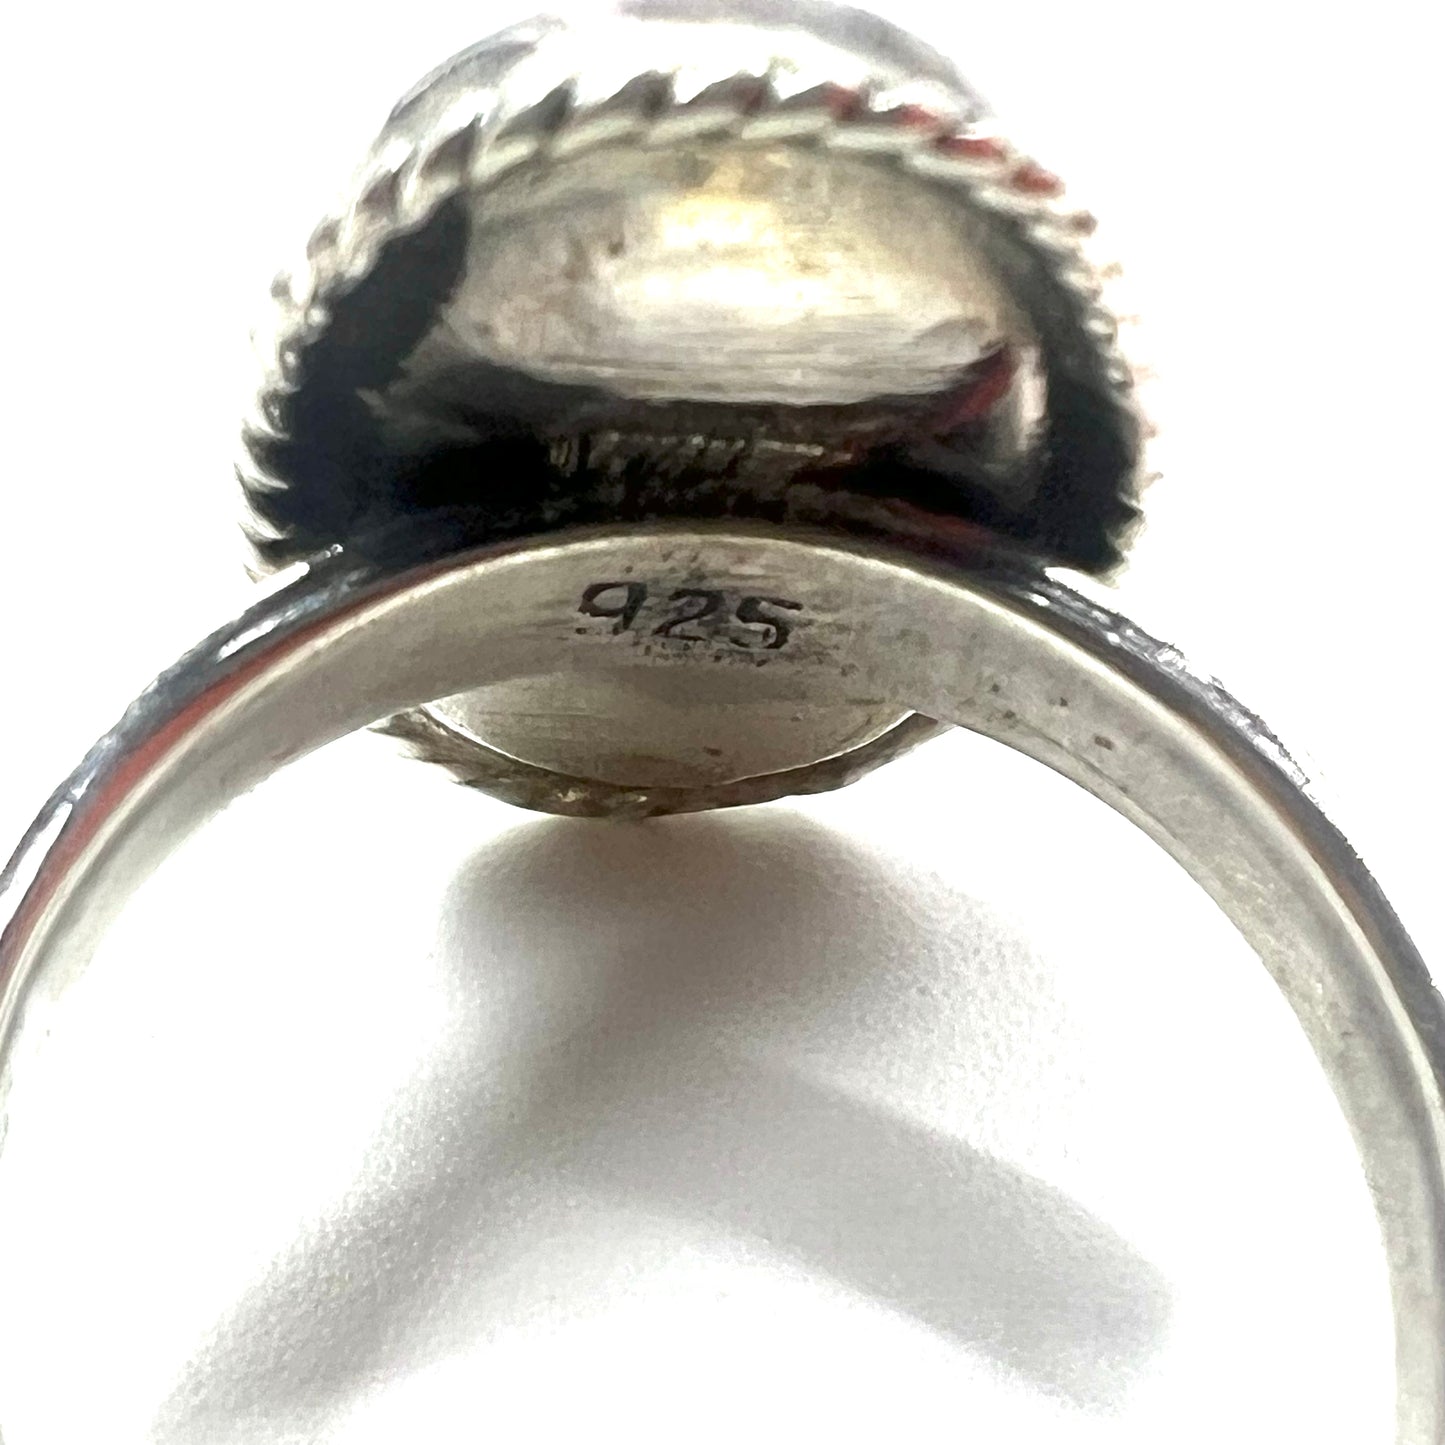 Vintage Indian Jewelry Ring ズニ族 インディアンジュエリー インレイ リング 指輪 11号 マルチカラー SILVER 925